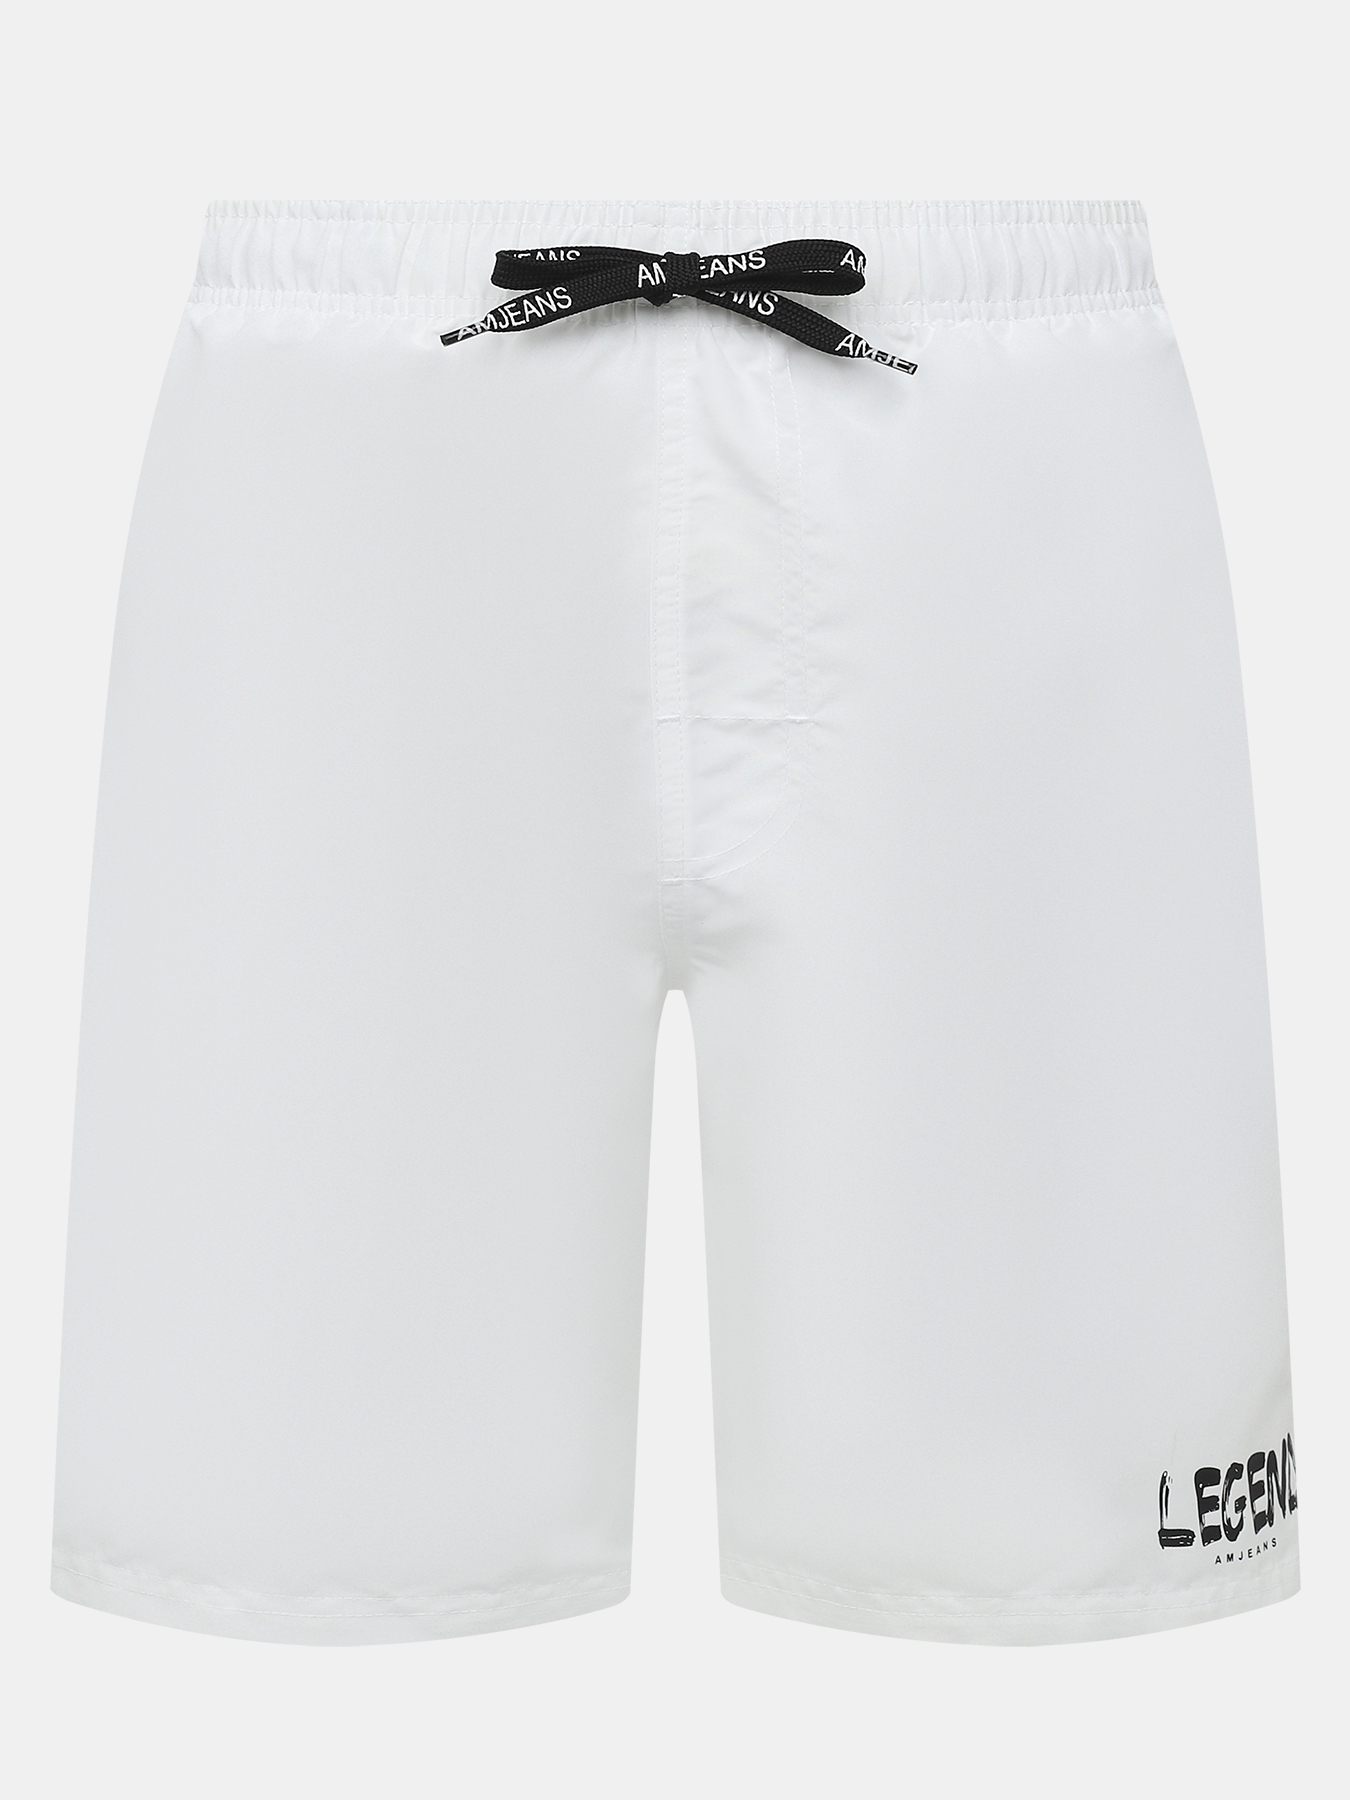 Шорты для плавания мужские Alessandro Manzoni Jeans 454098 белые 56 RU